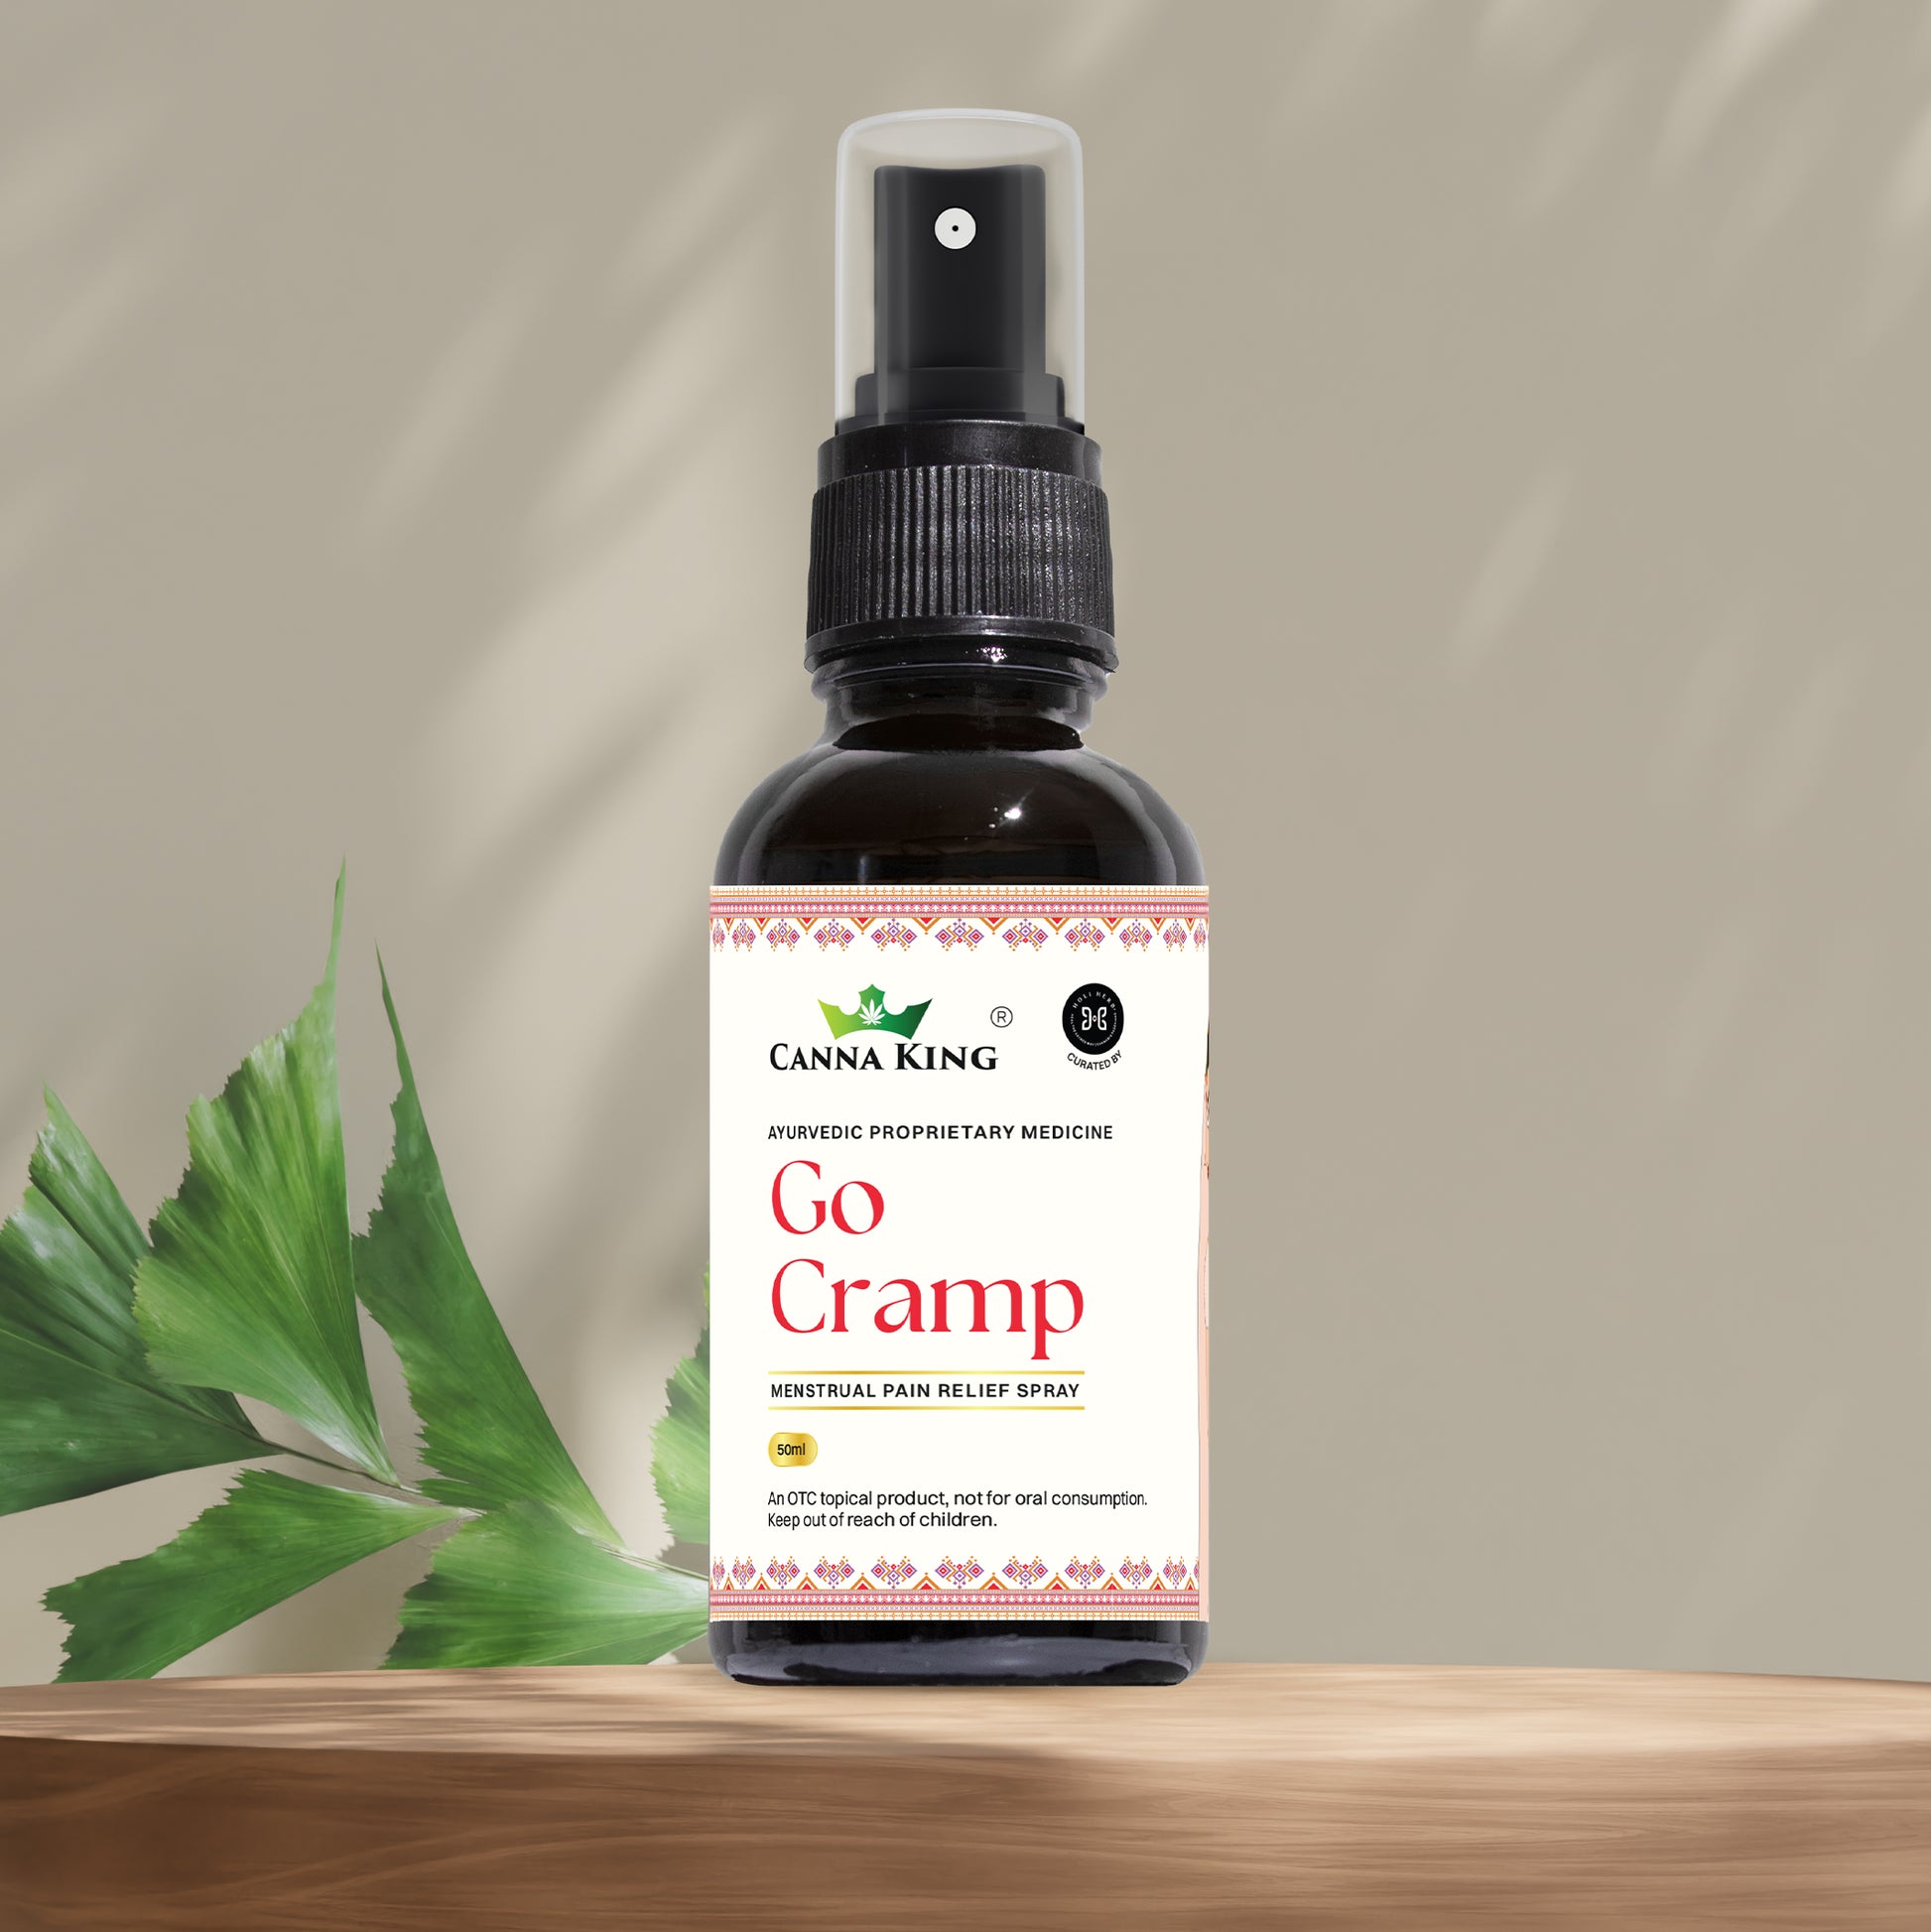 Go Cramp: Menstrual Pain Relief Spray